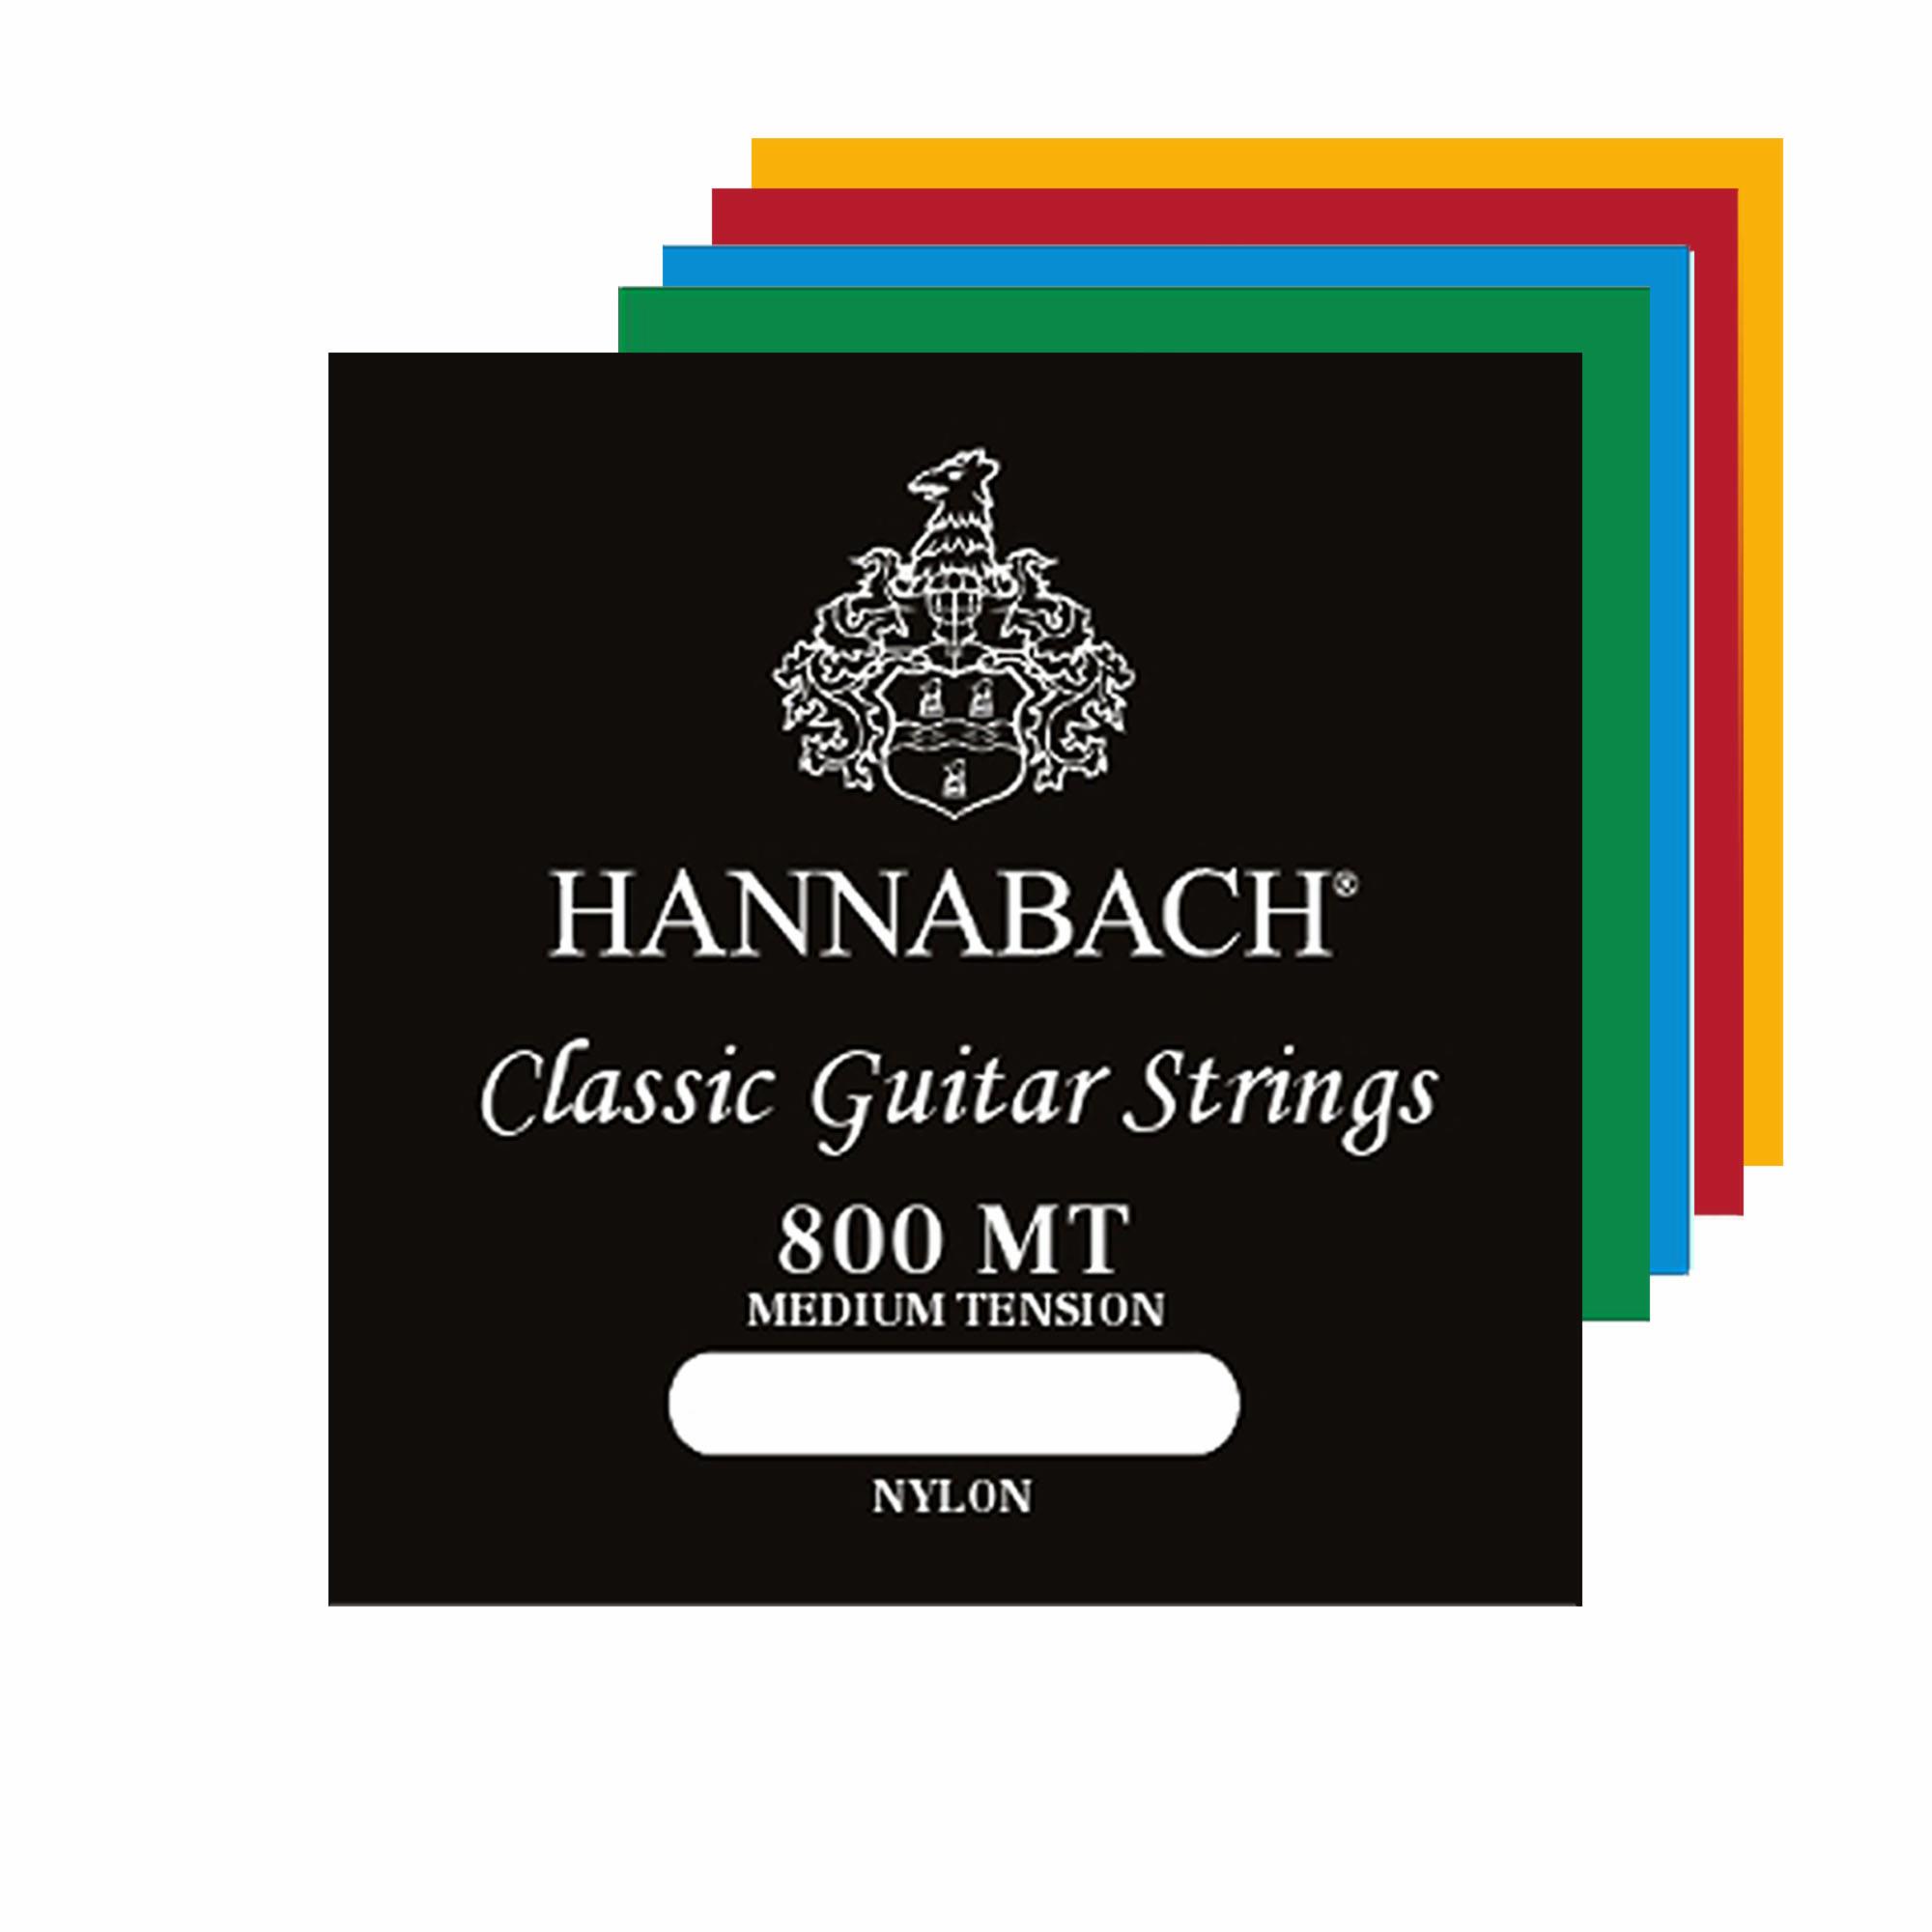 Hannabach 800 Classic Guitar Strings